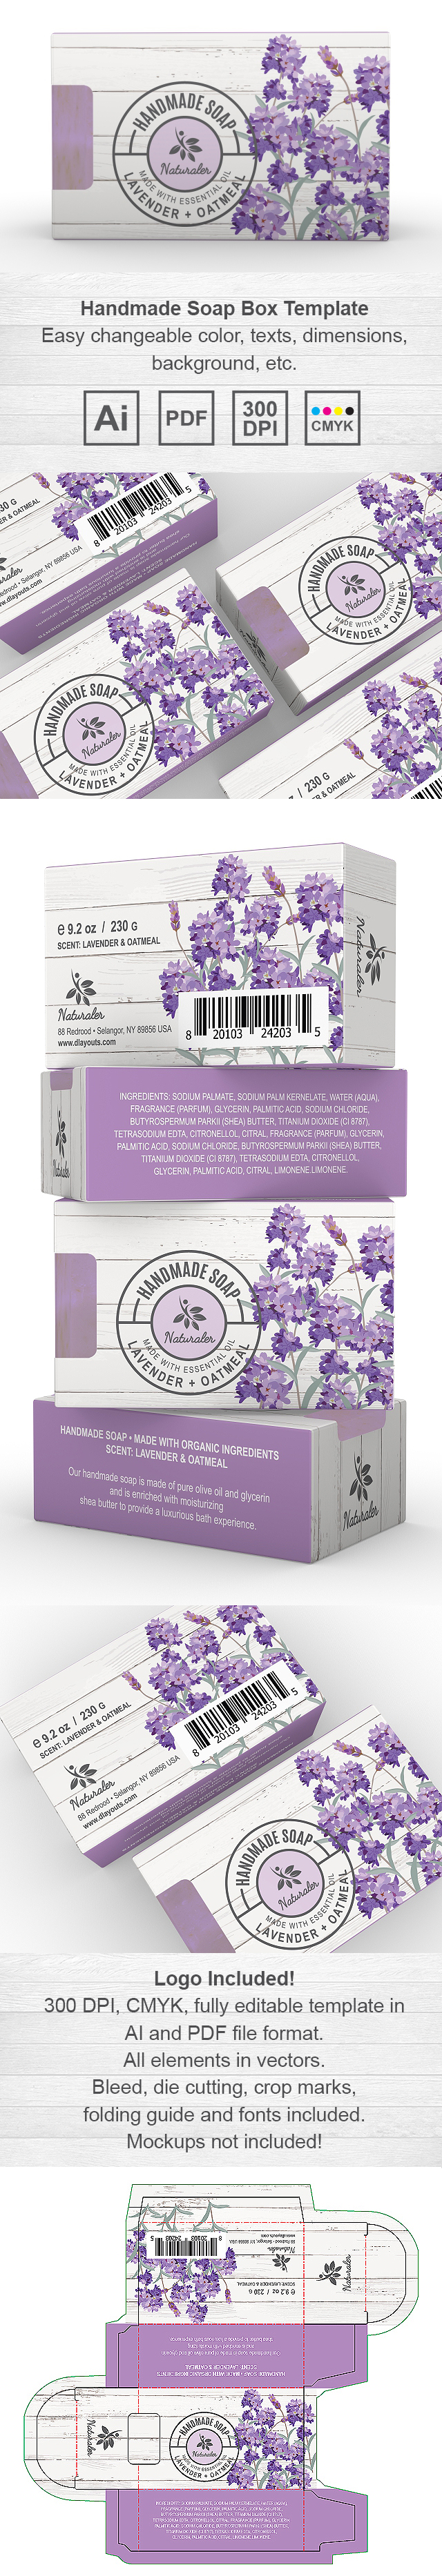 Handmade Lavender Soap Packaging Template